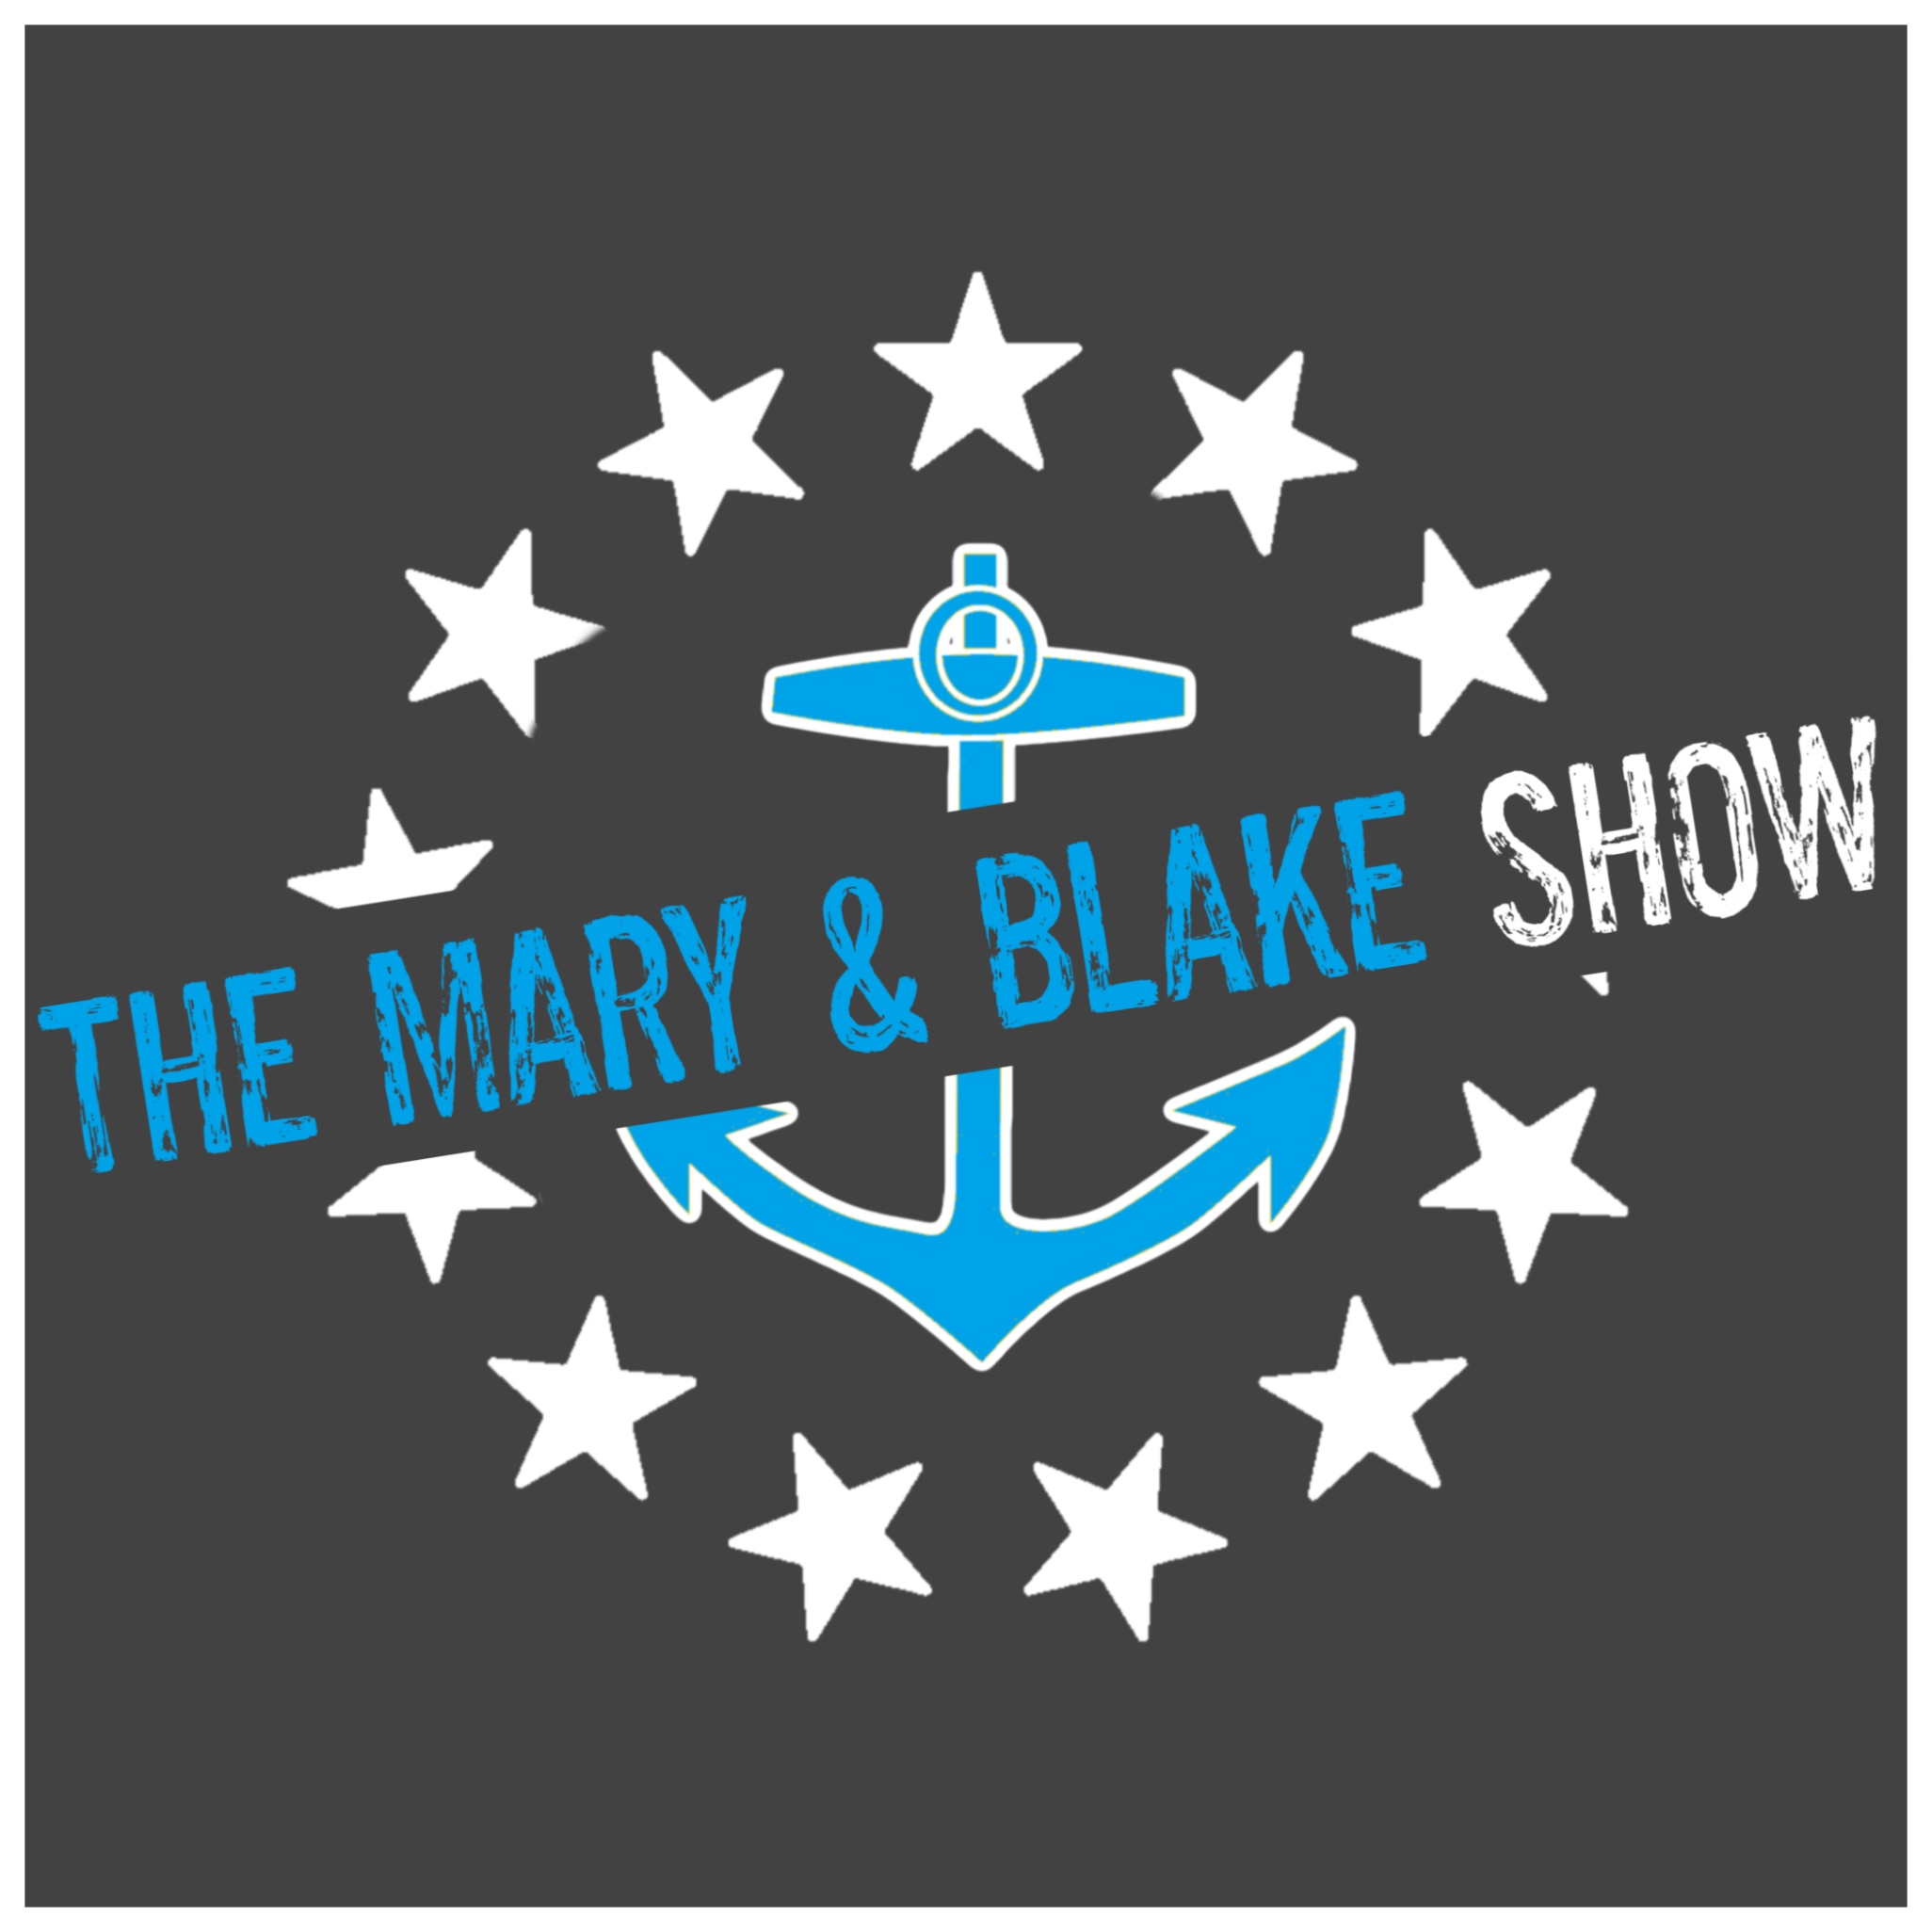 The Mary & Blake Show Art